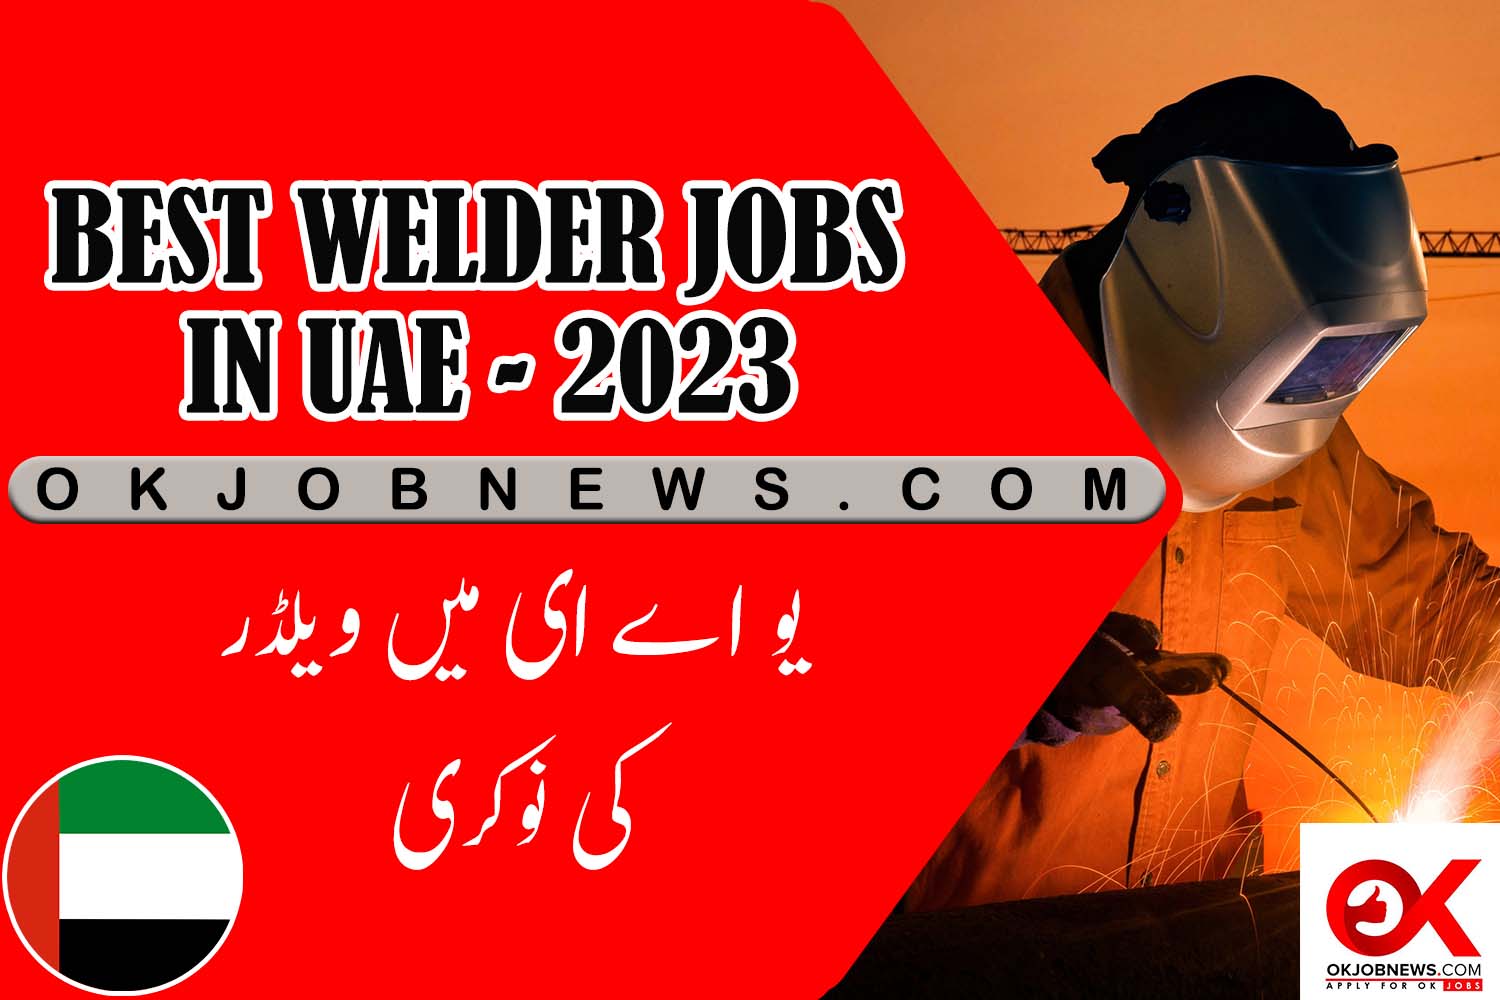 BEST WELDER JOBS IN UAE 2023